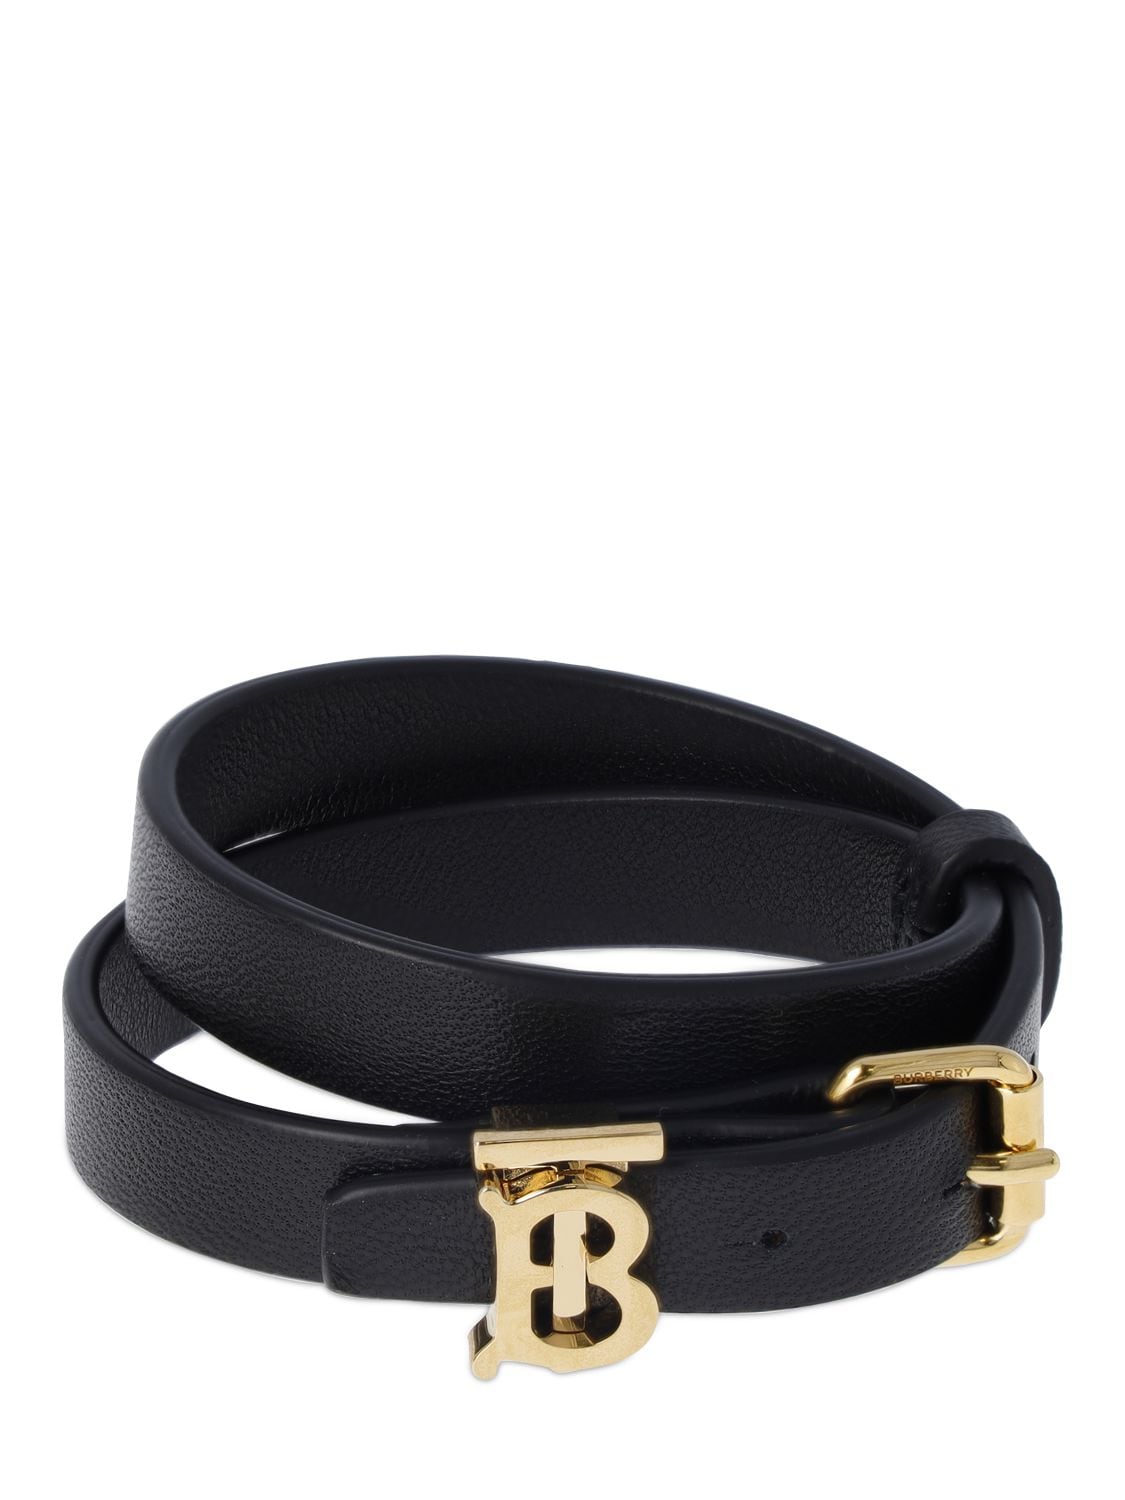 Burberry Tb Double Wrap Leather Bracelet In Black/light Gold